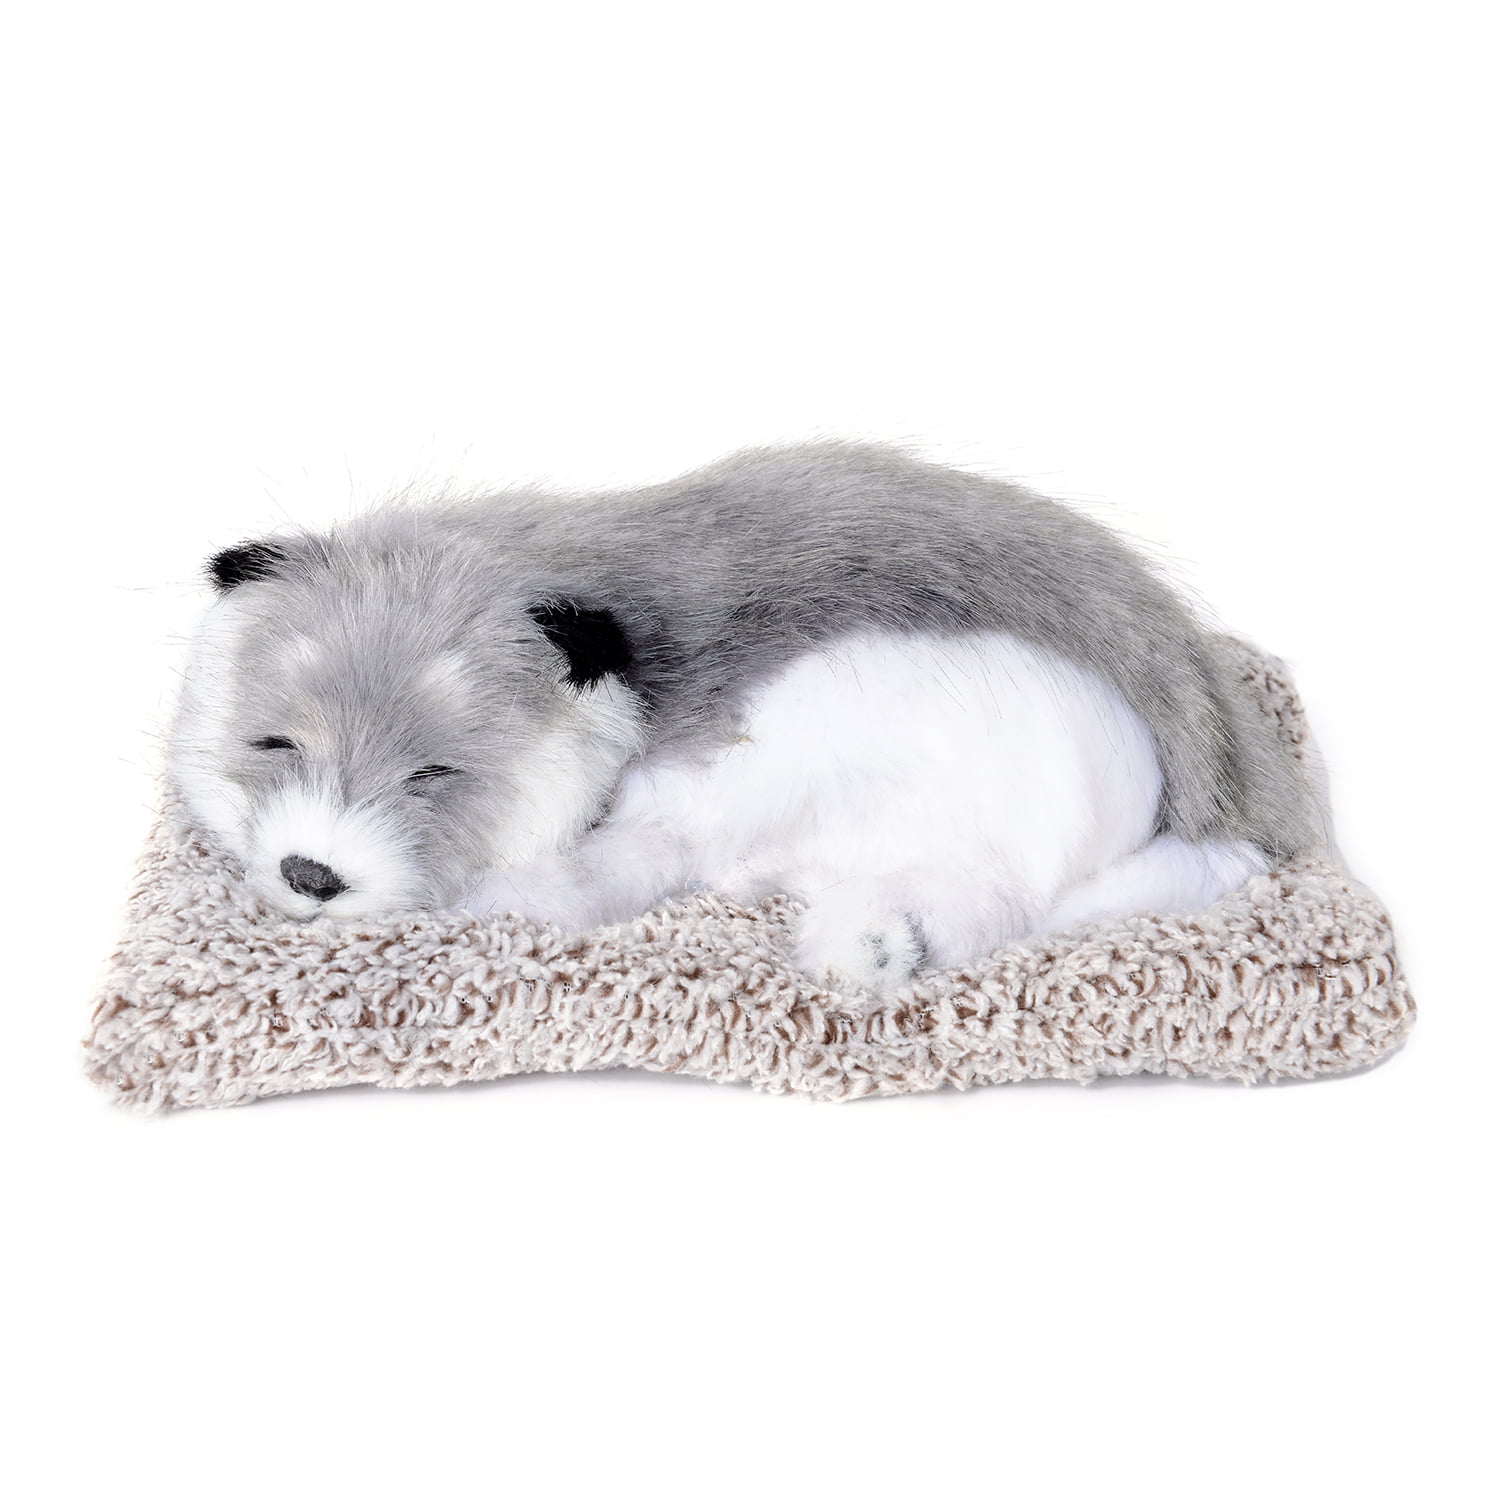 Border Collie Puppy Pet Dog Sleeping on Mat Warm Soft Bed